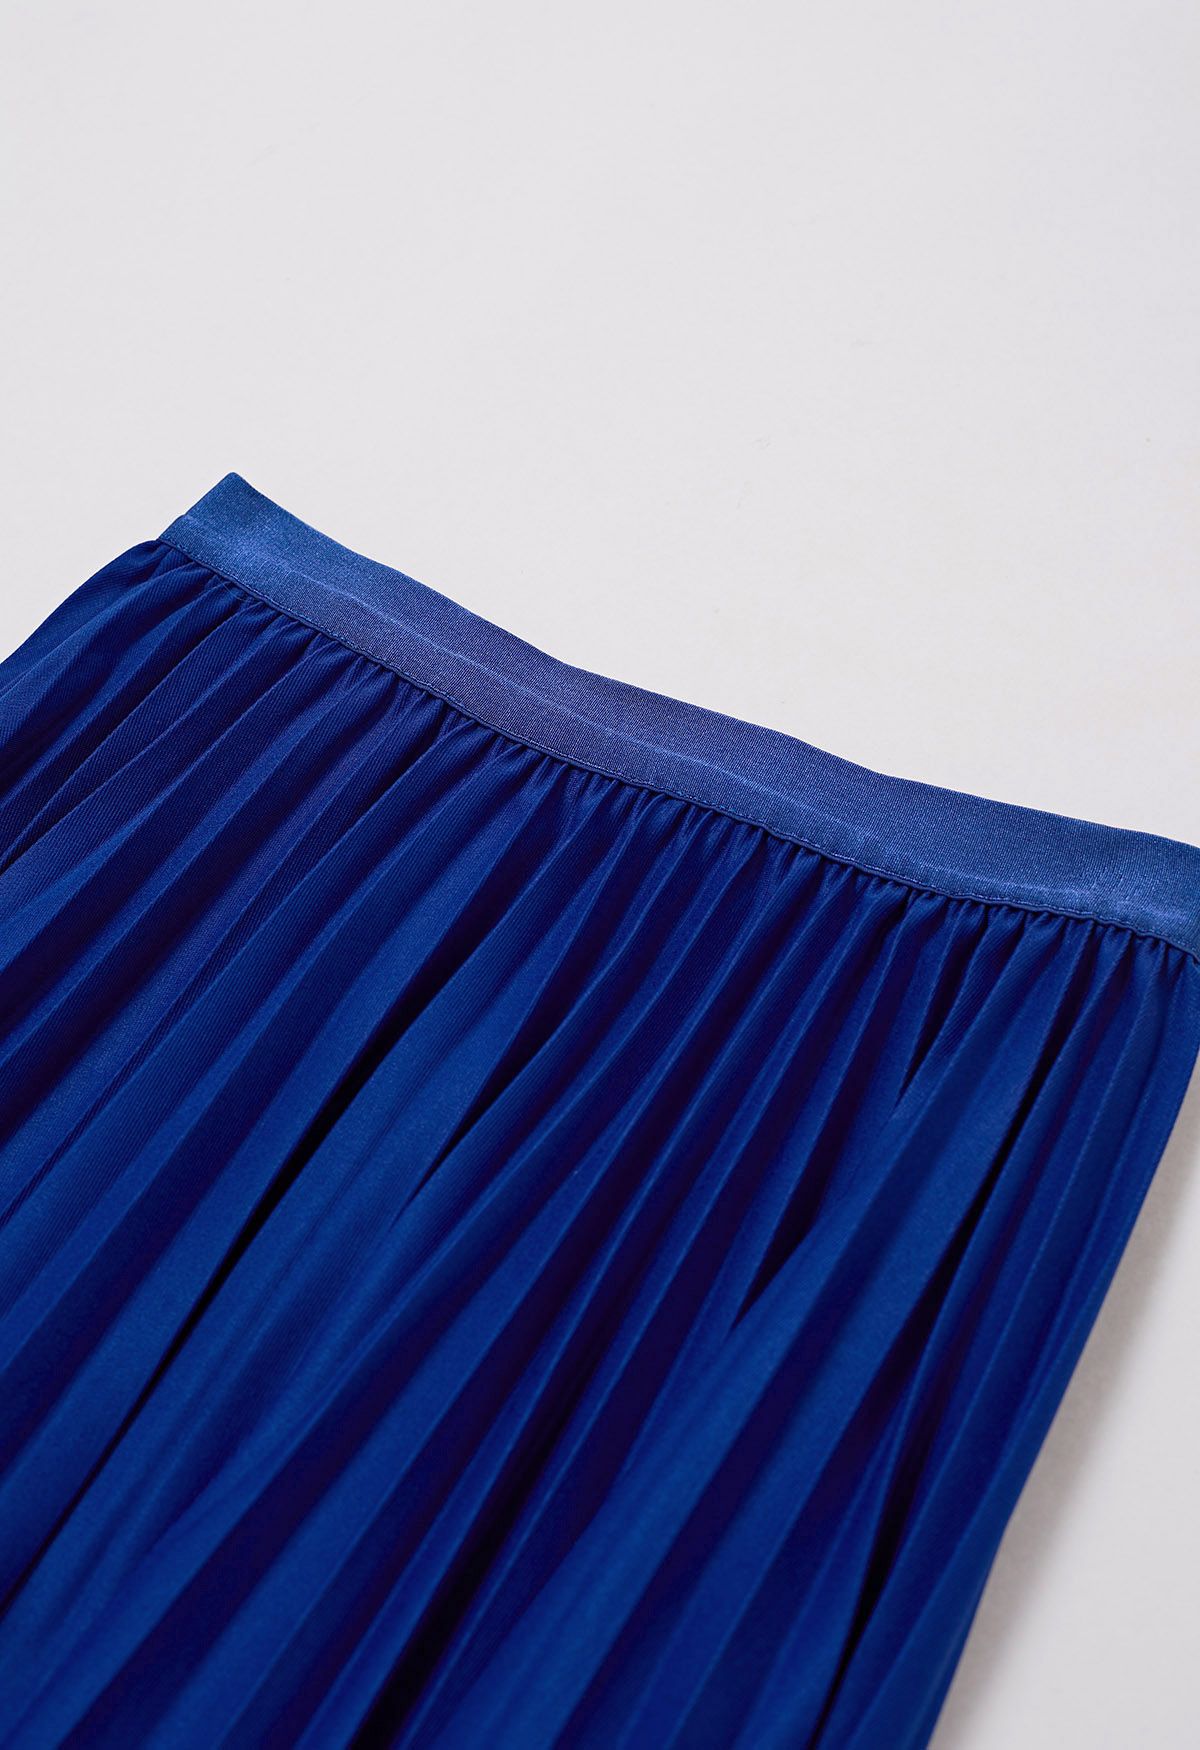 Falda midi plisada azul real